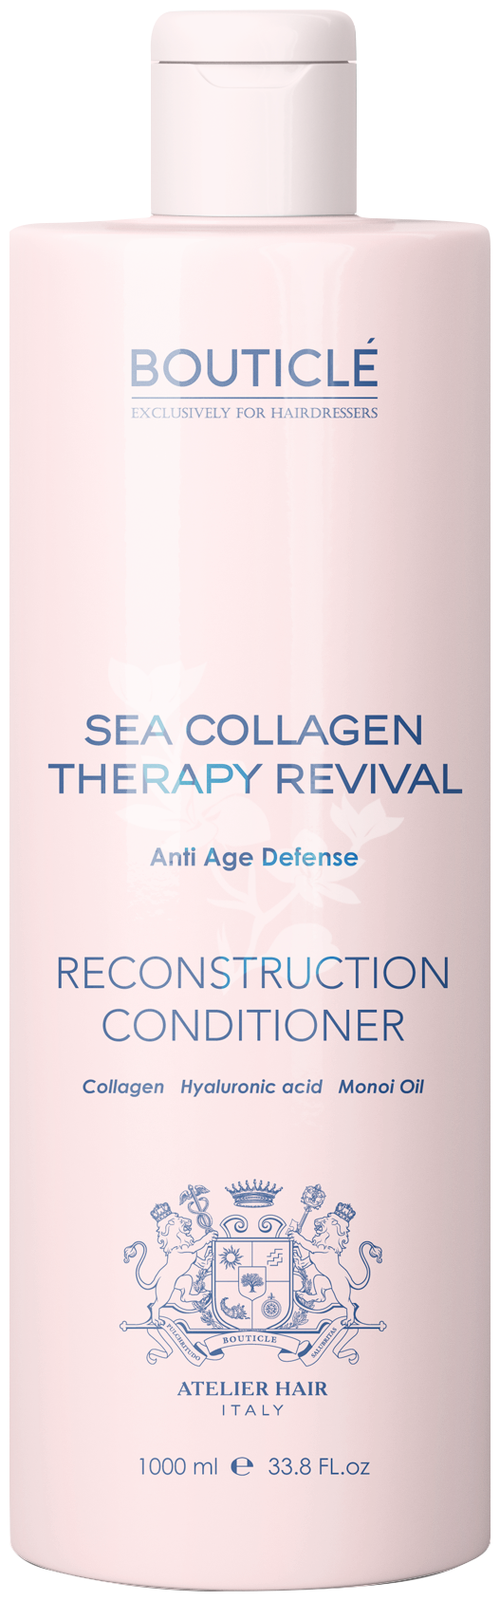 Bouticle кондиционер Sea Collagen Therapy Revival Reconstruction коллагеновый восстанавливающий для волос, 1000 мл